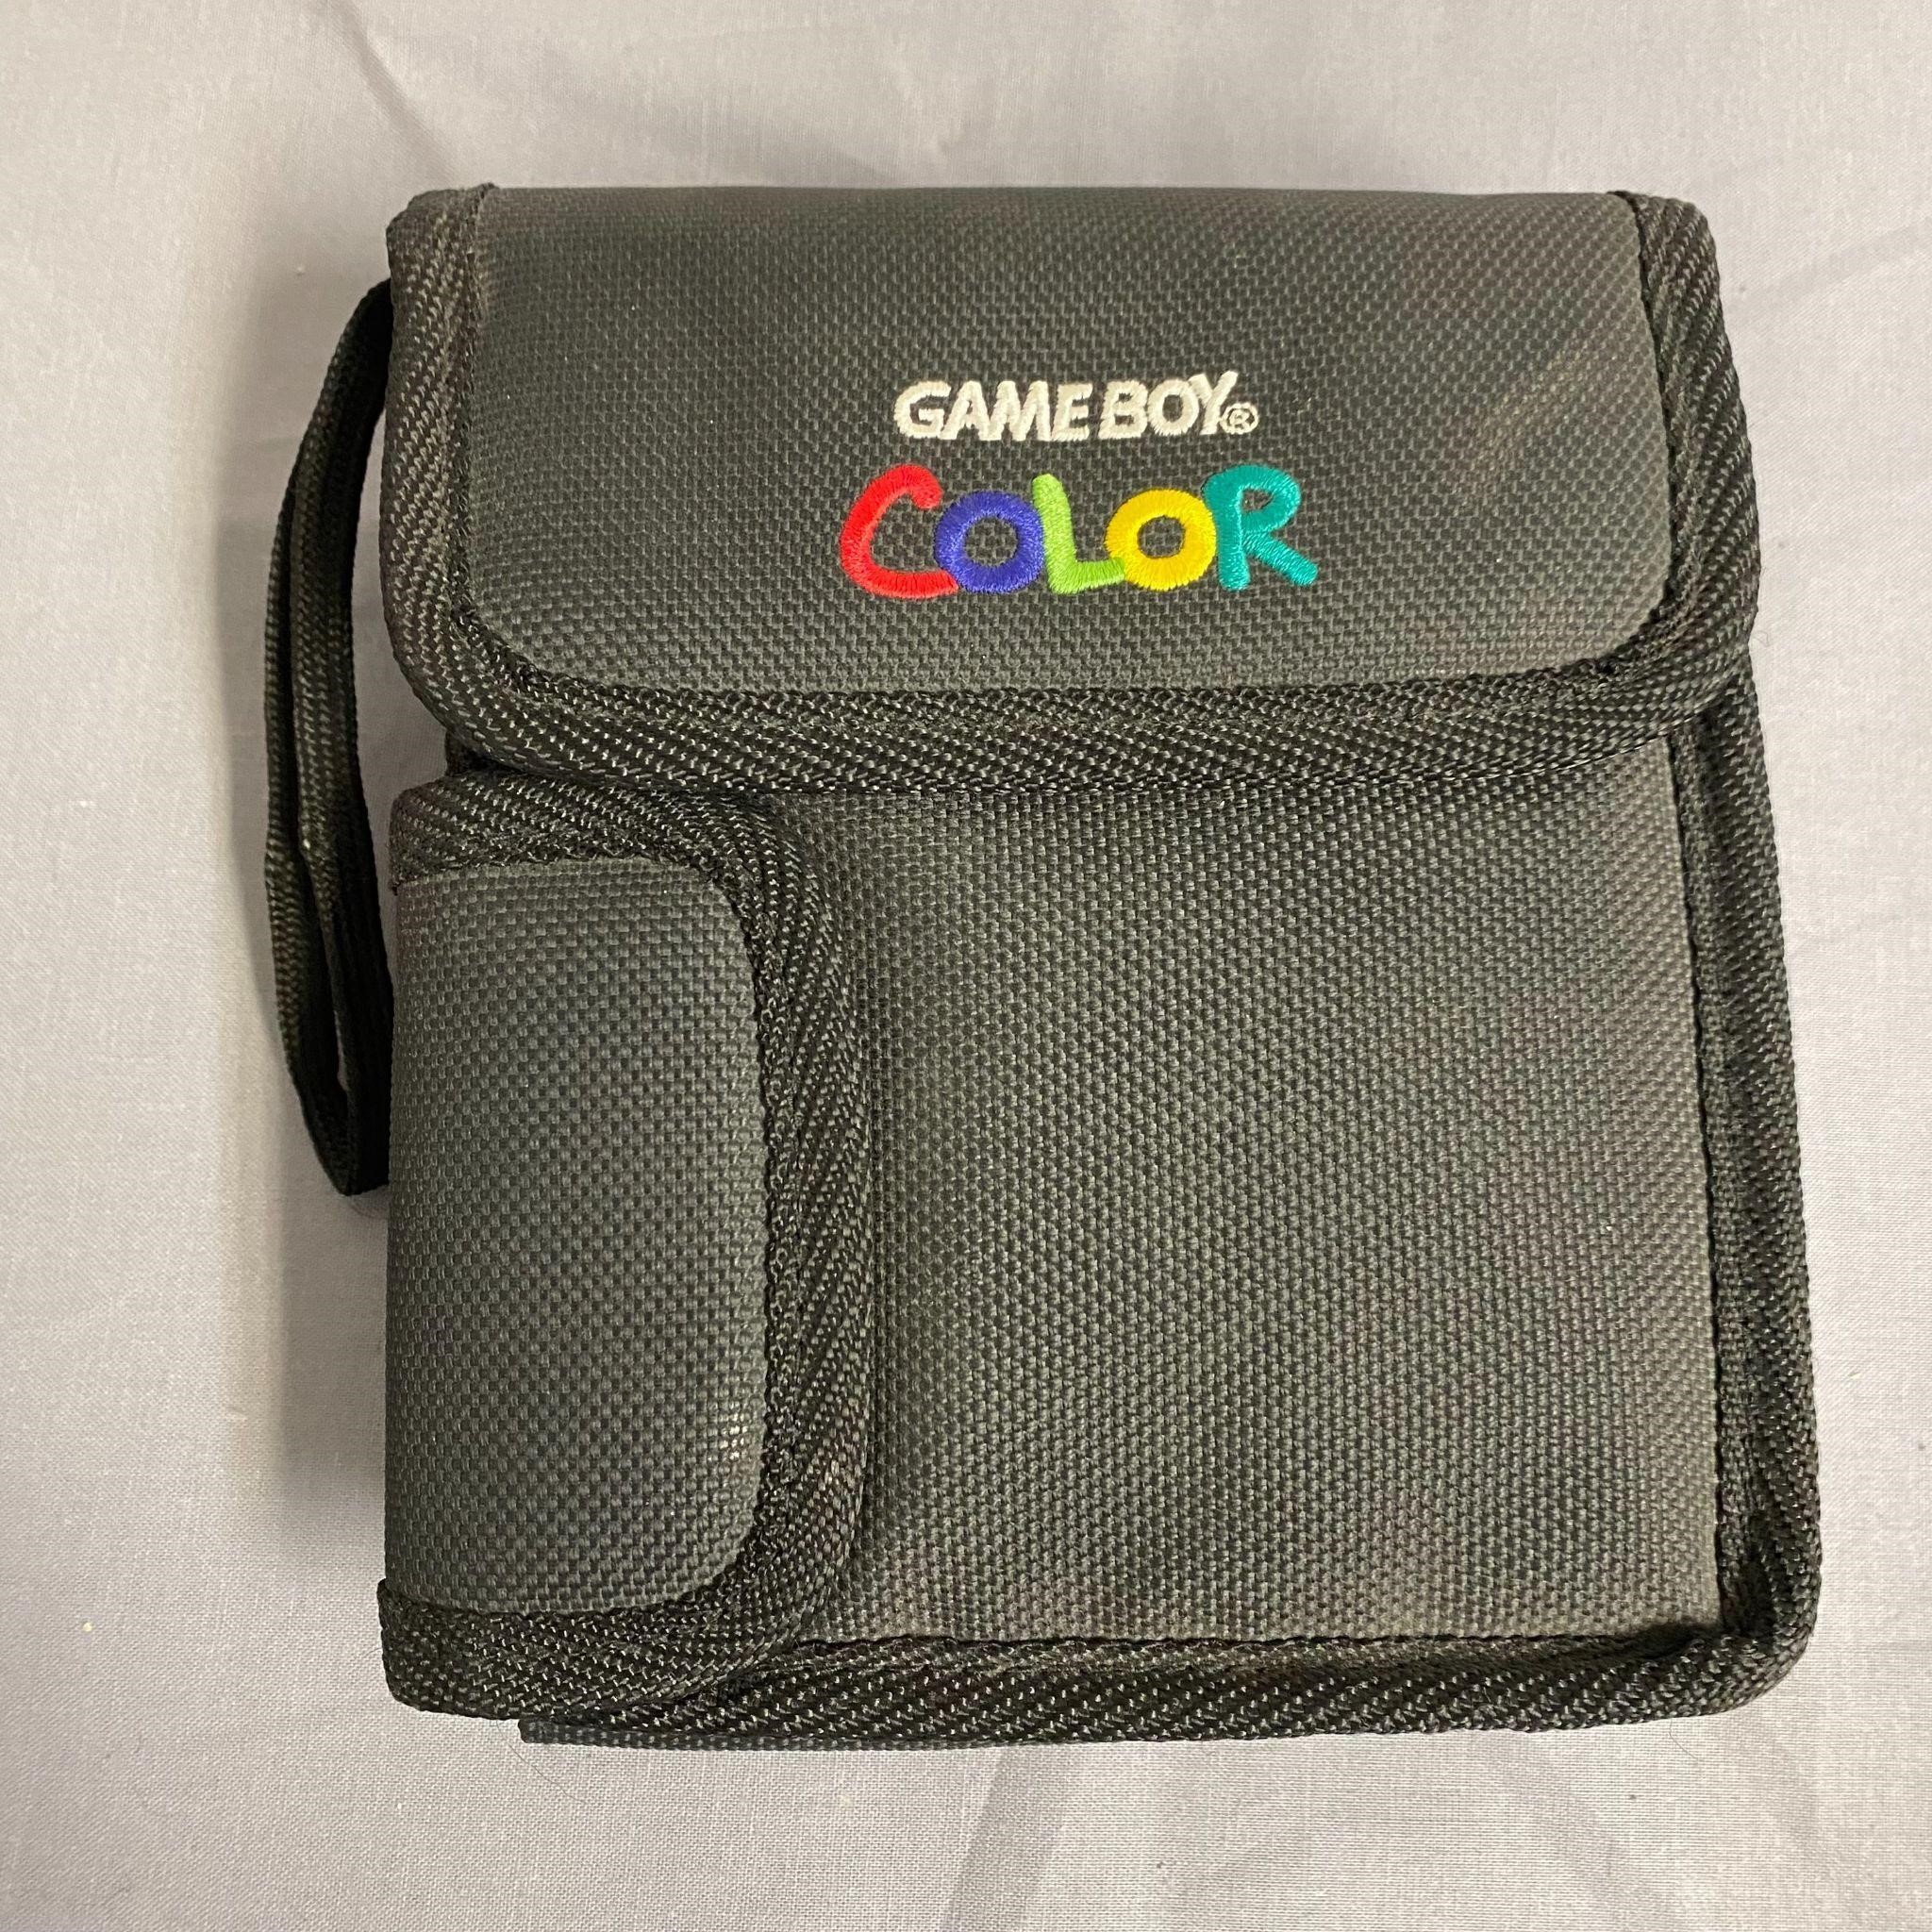 Nintendo Game Boy Color Soft Travel Case Bag